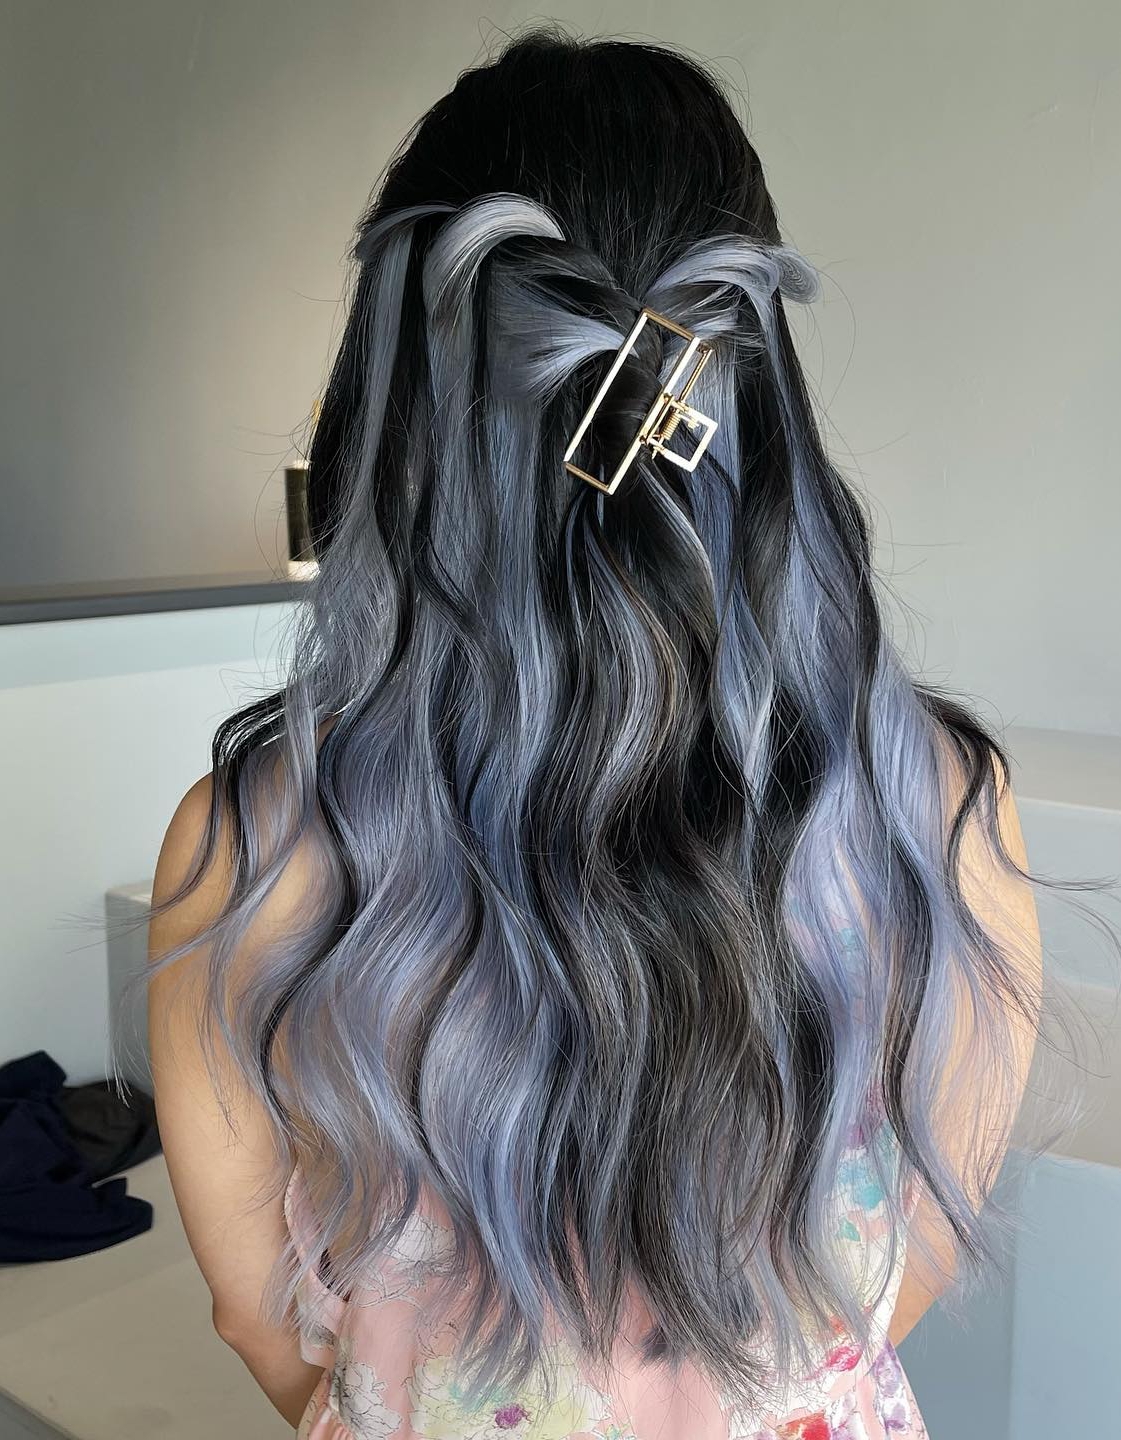 Long Black Hair with Blue and Gray Peekaboo Highlights